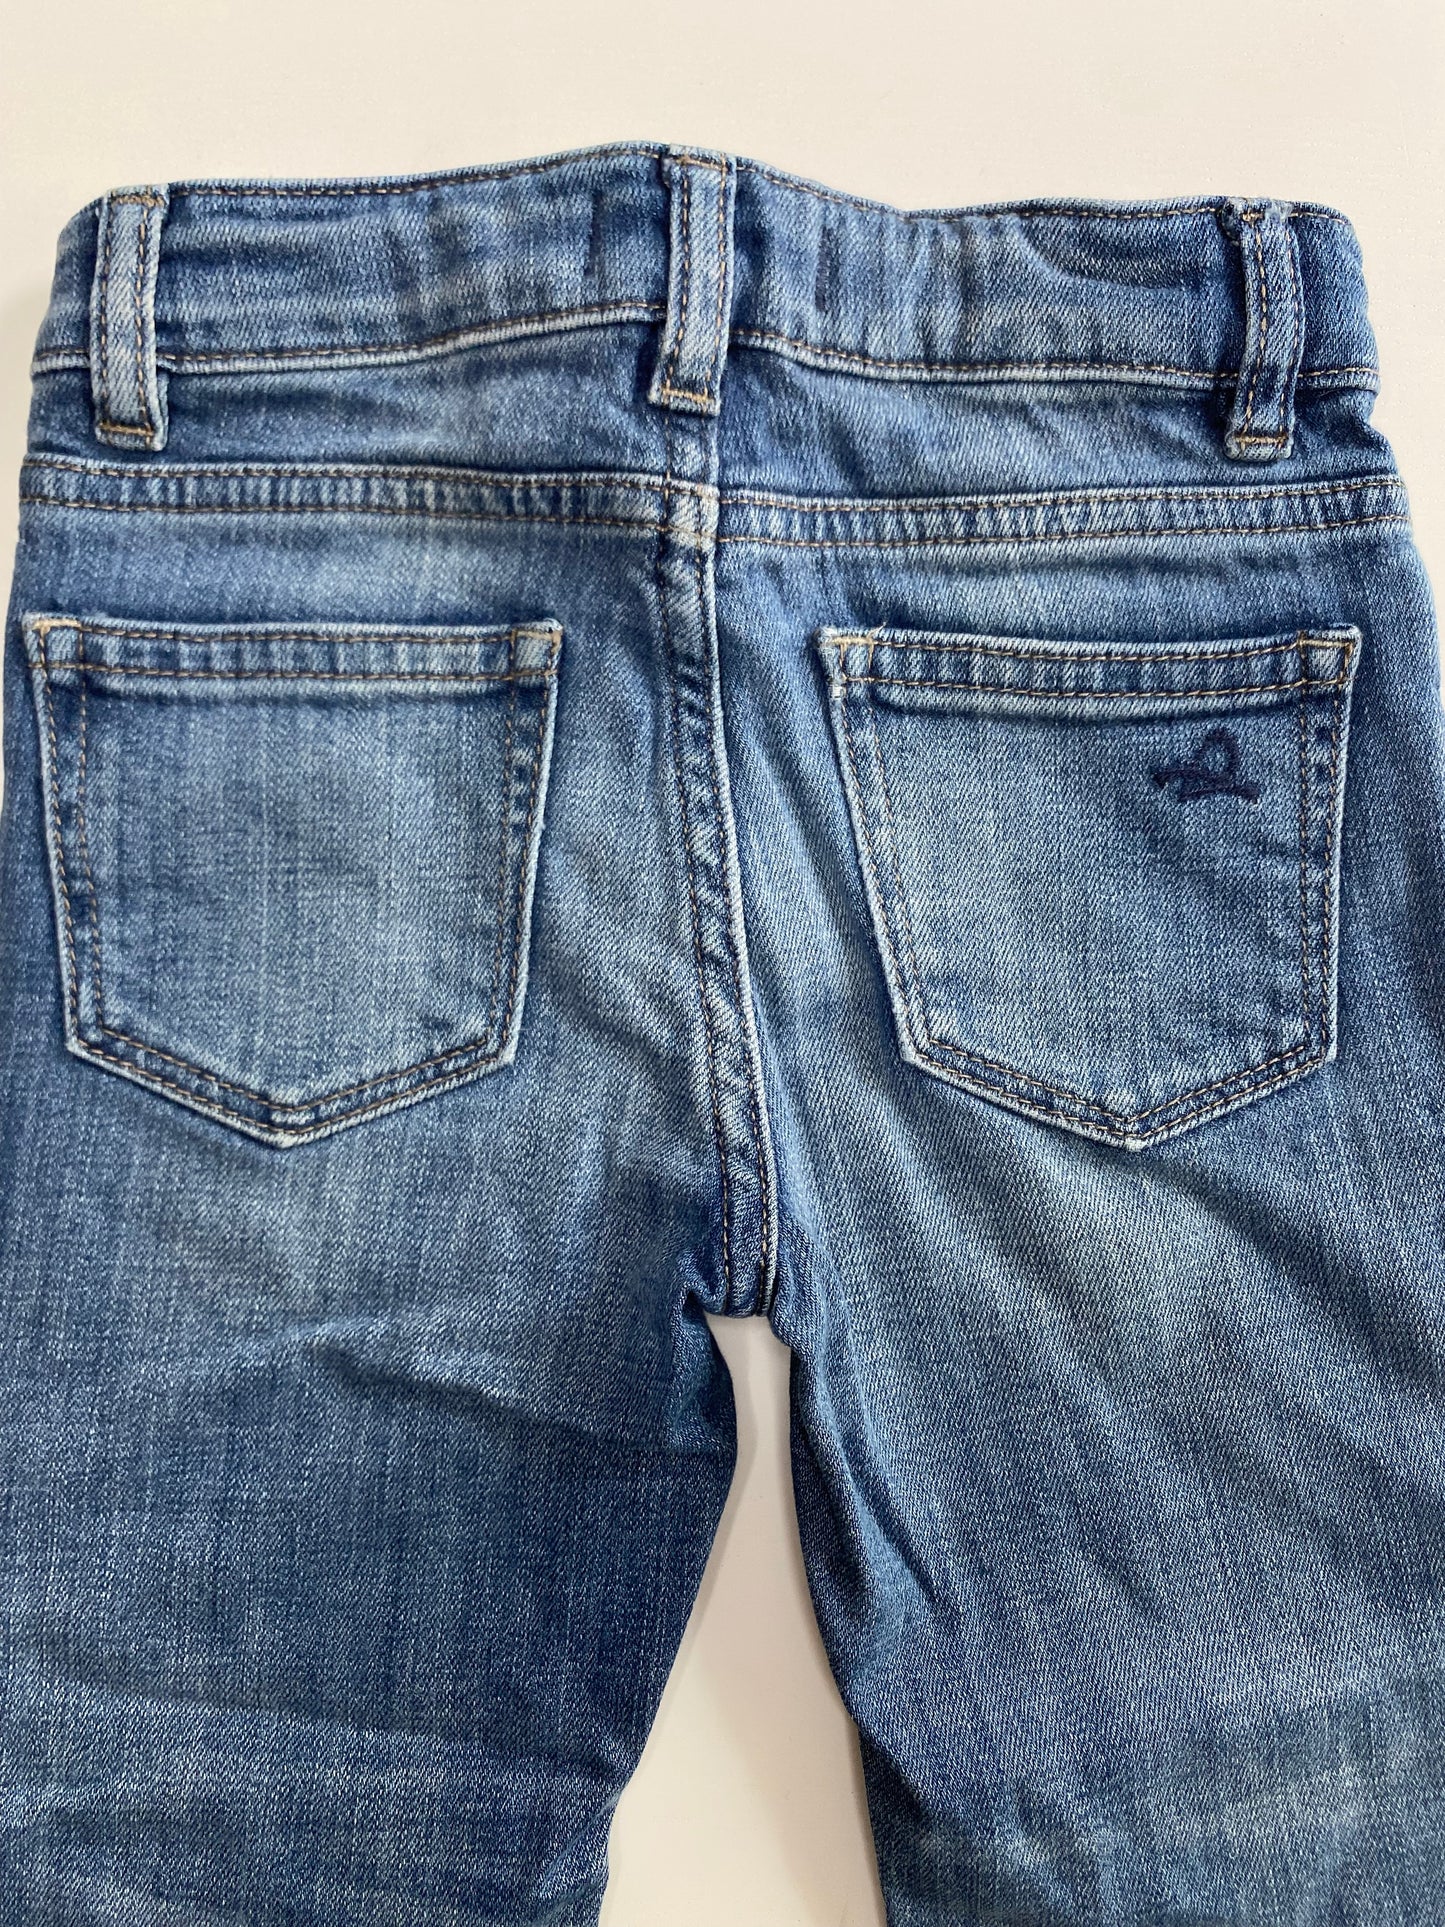 DL1961 Brasdy Slim Jeans SIze 4y